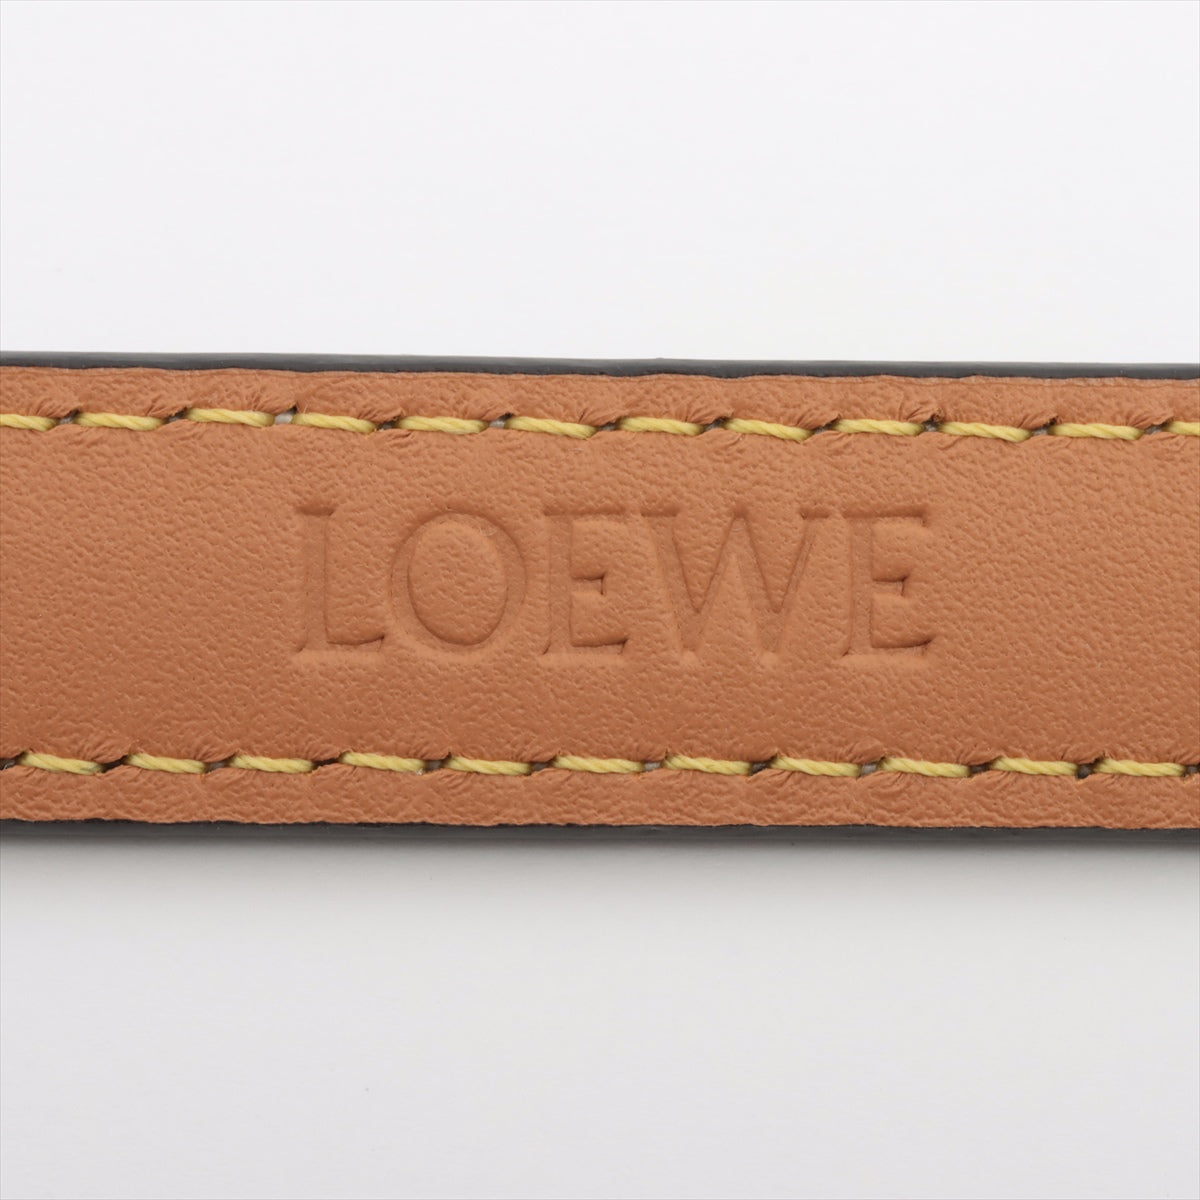 Loewe Belt 80/32 Leather Green